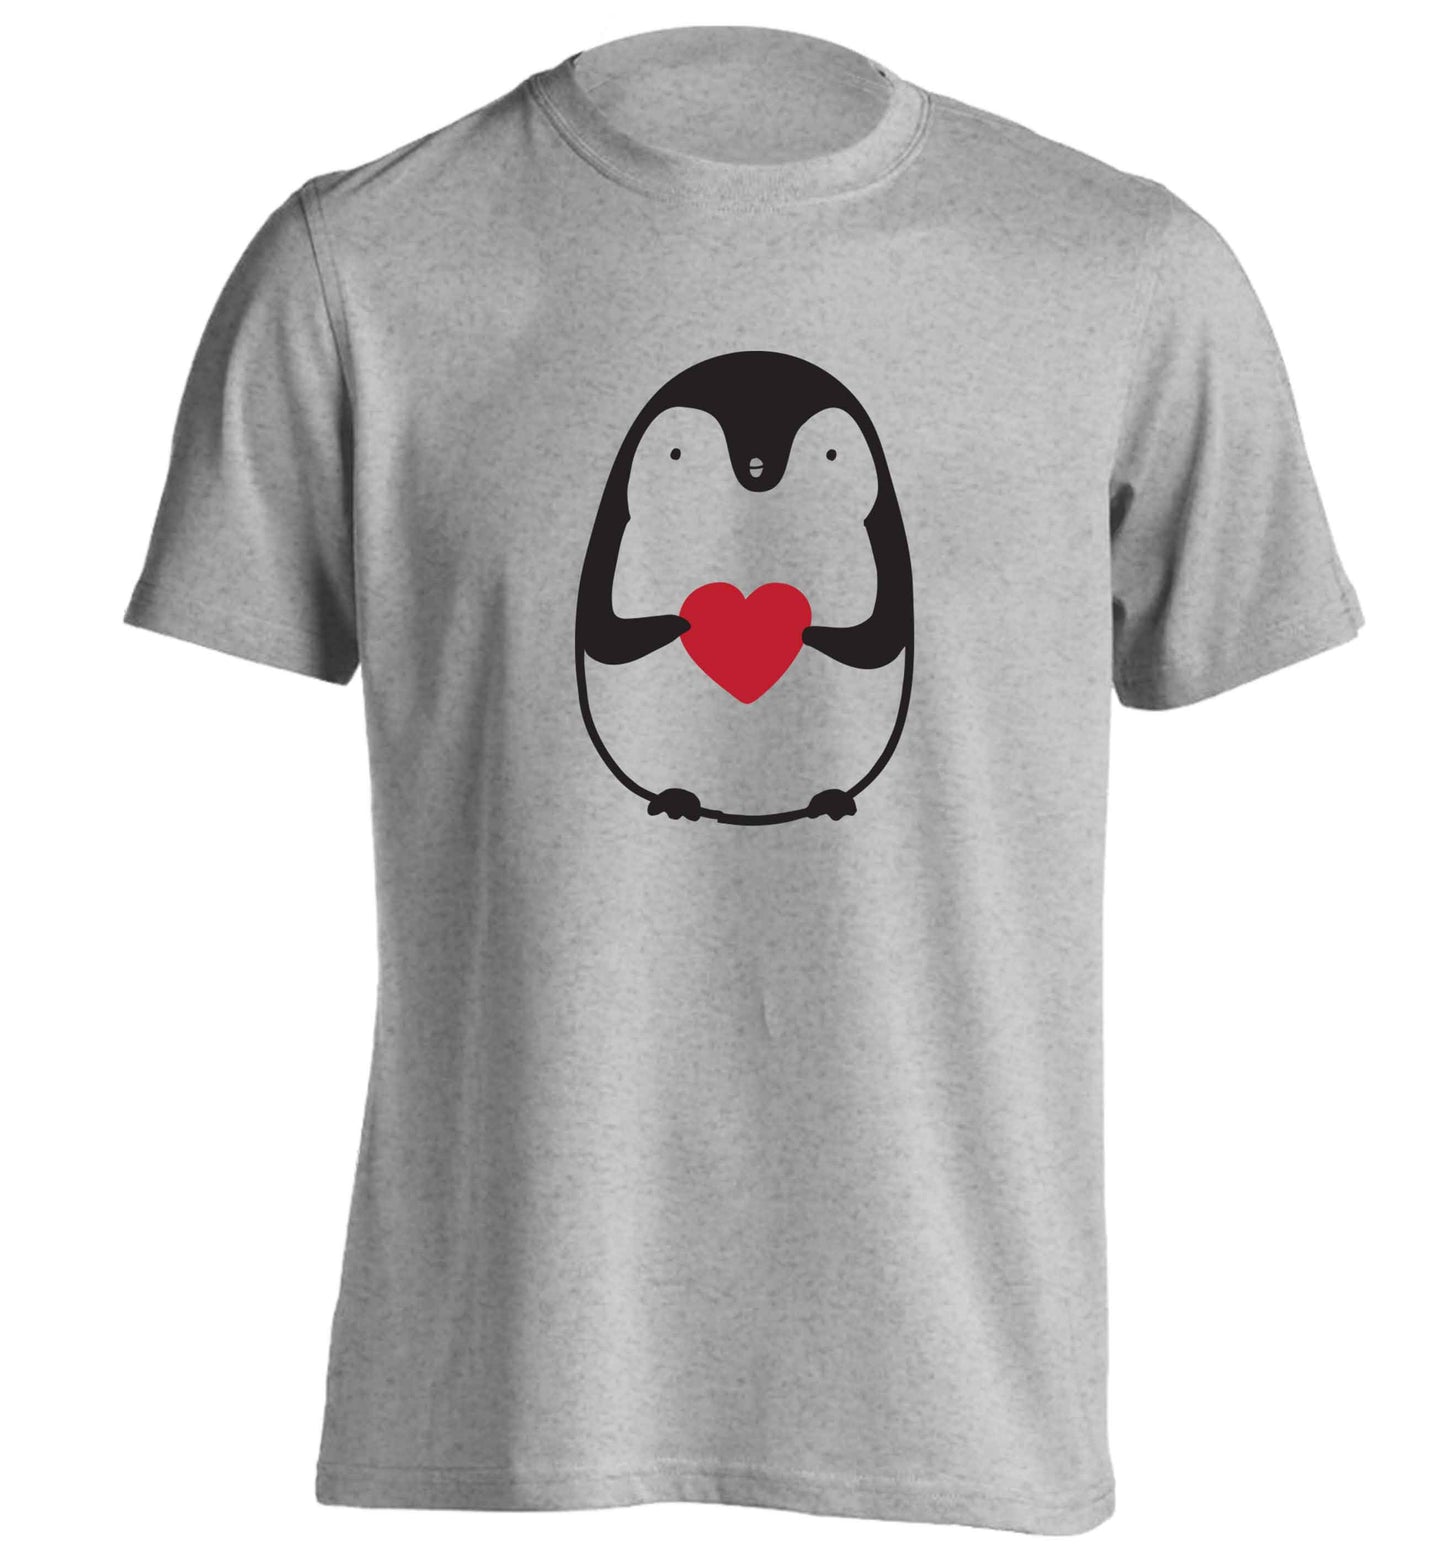 Cute penguin heart adults unisex grey Tshirt 2XL